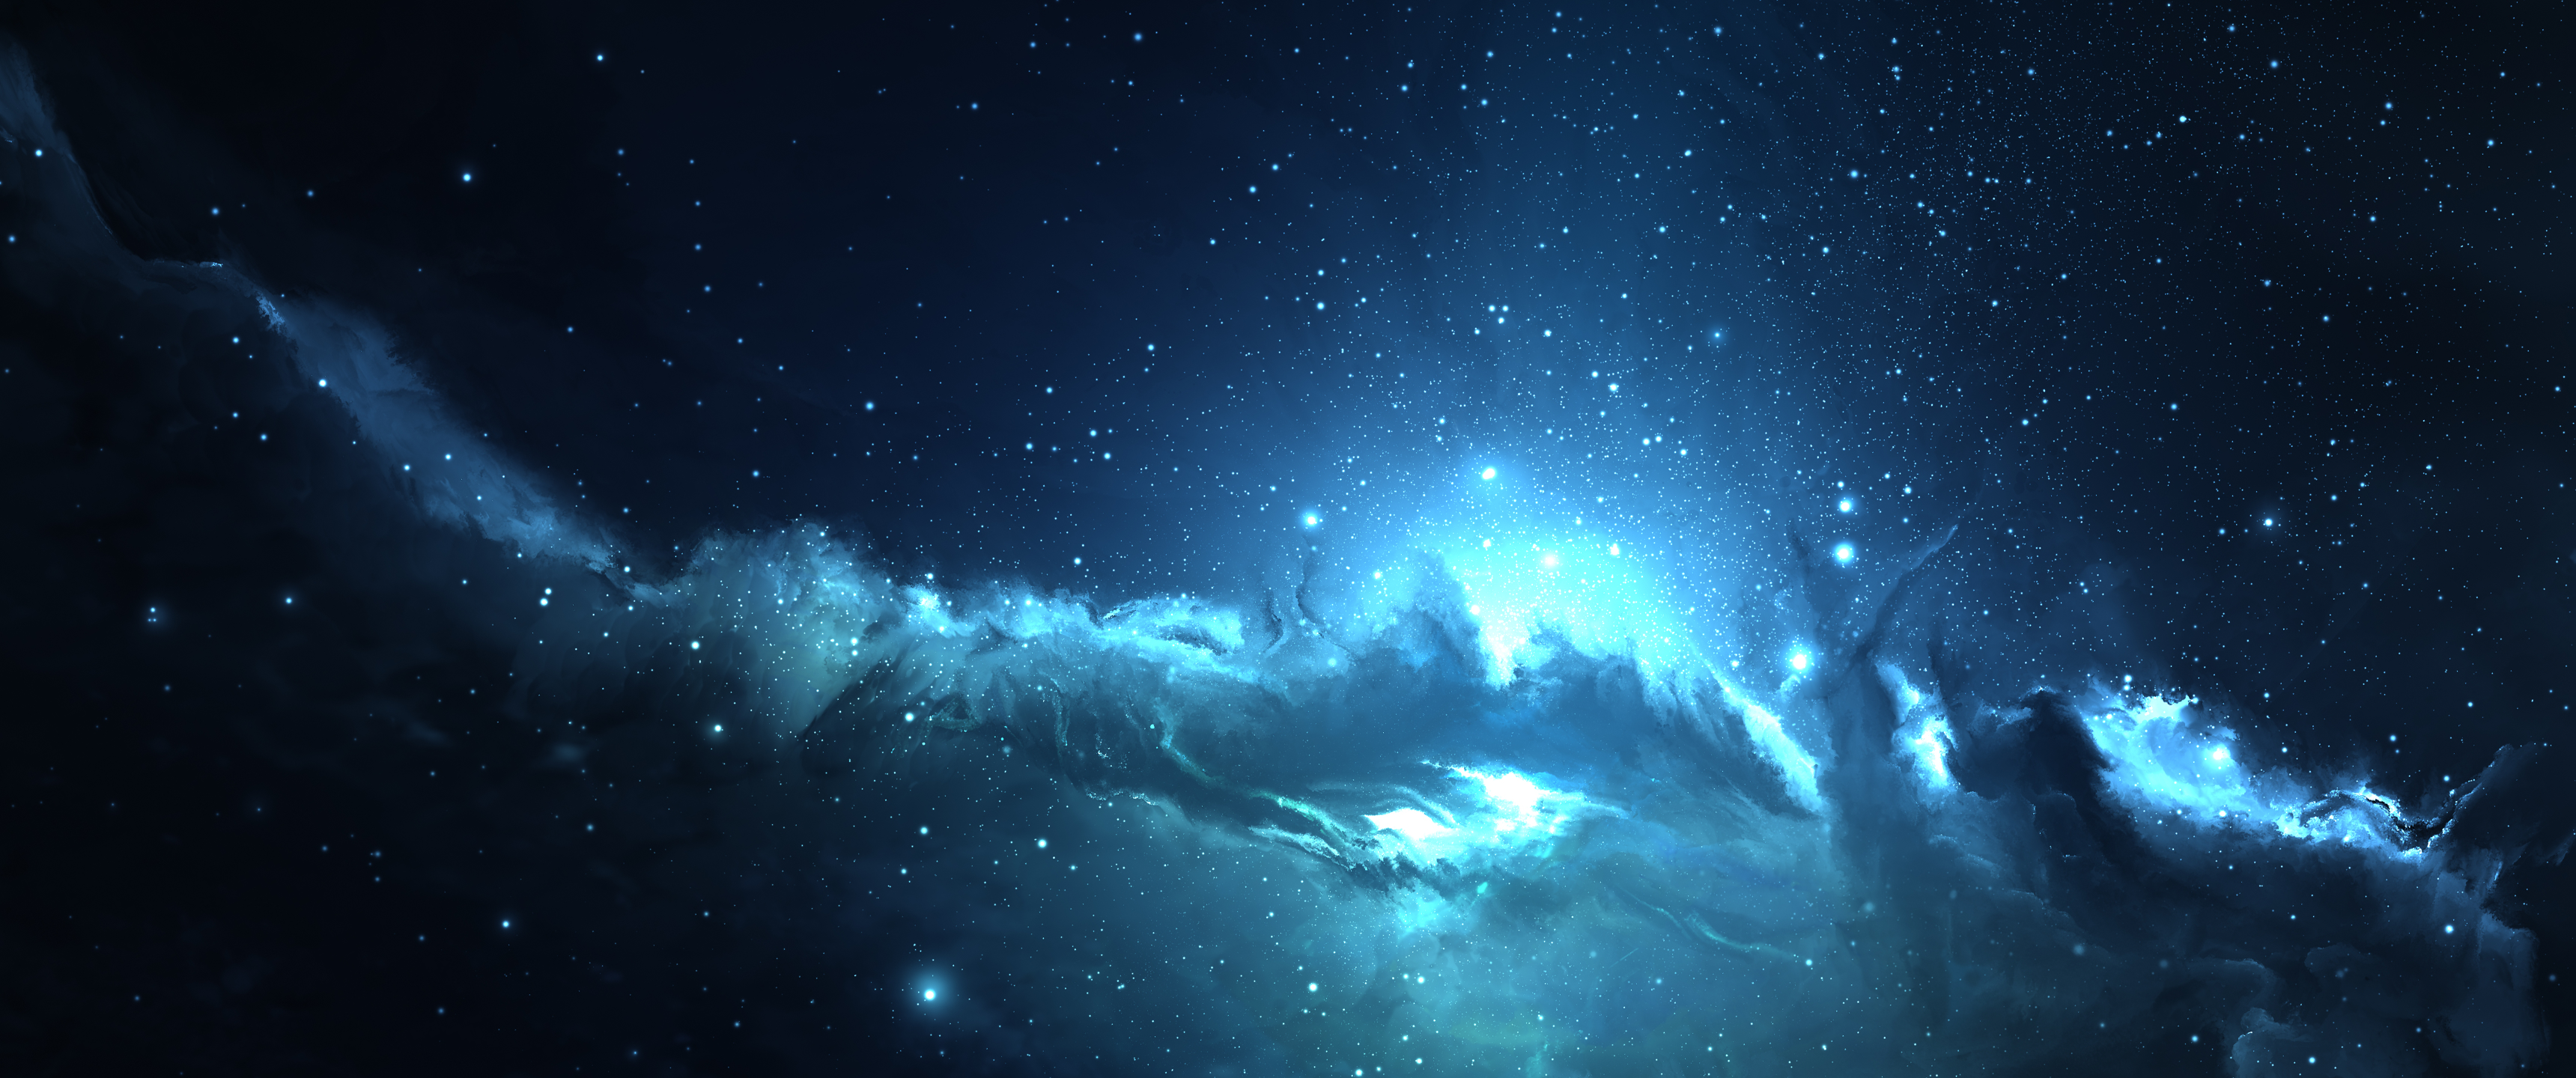 スペース壁紙hd,宇宙,雰囲気,空,天体,星雲